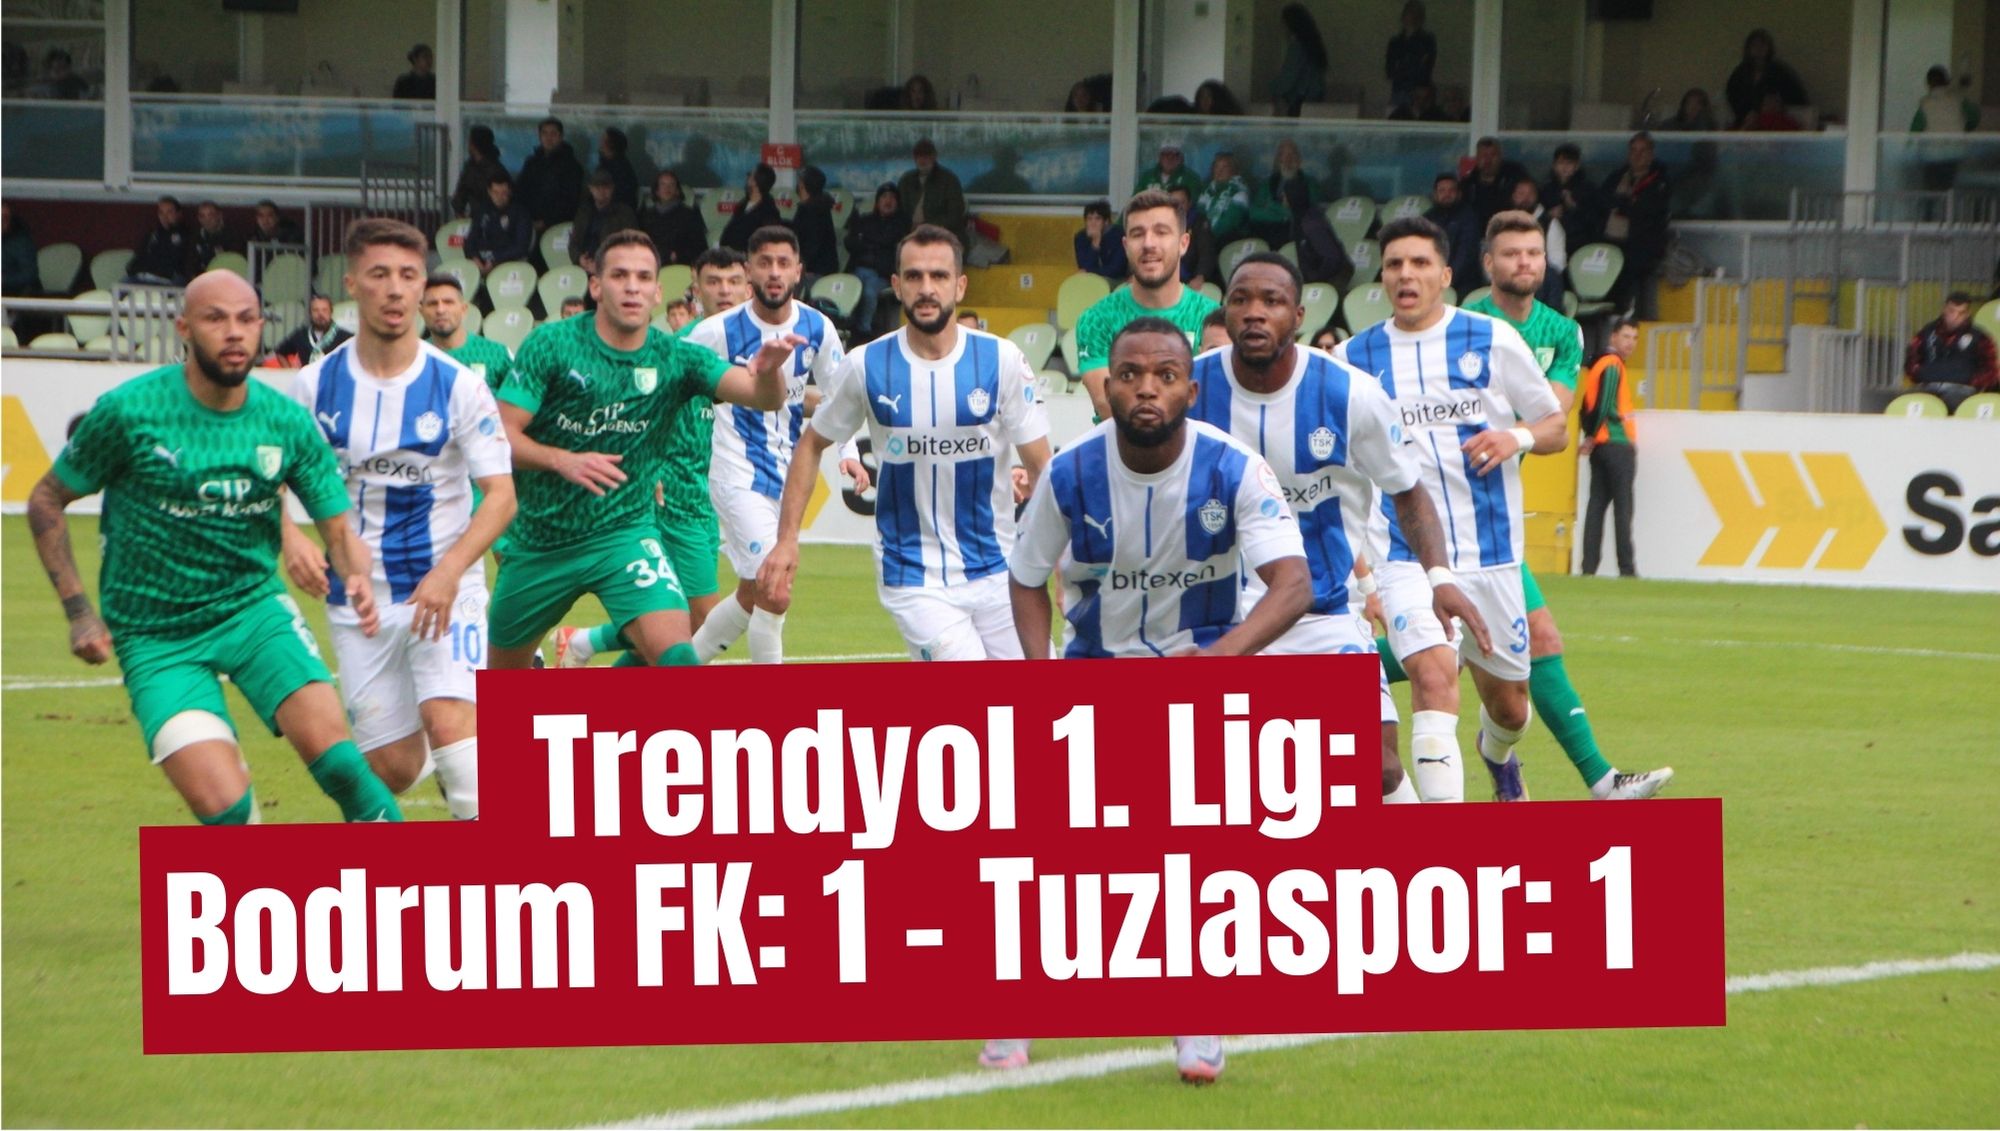 Trendyol 1. Lig: Bodrum FK: 1 - Tuzlaspor: 1